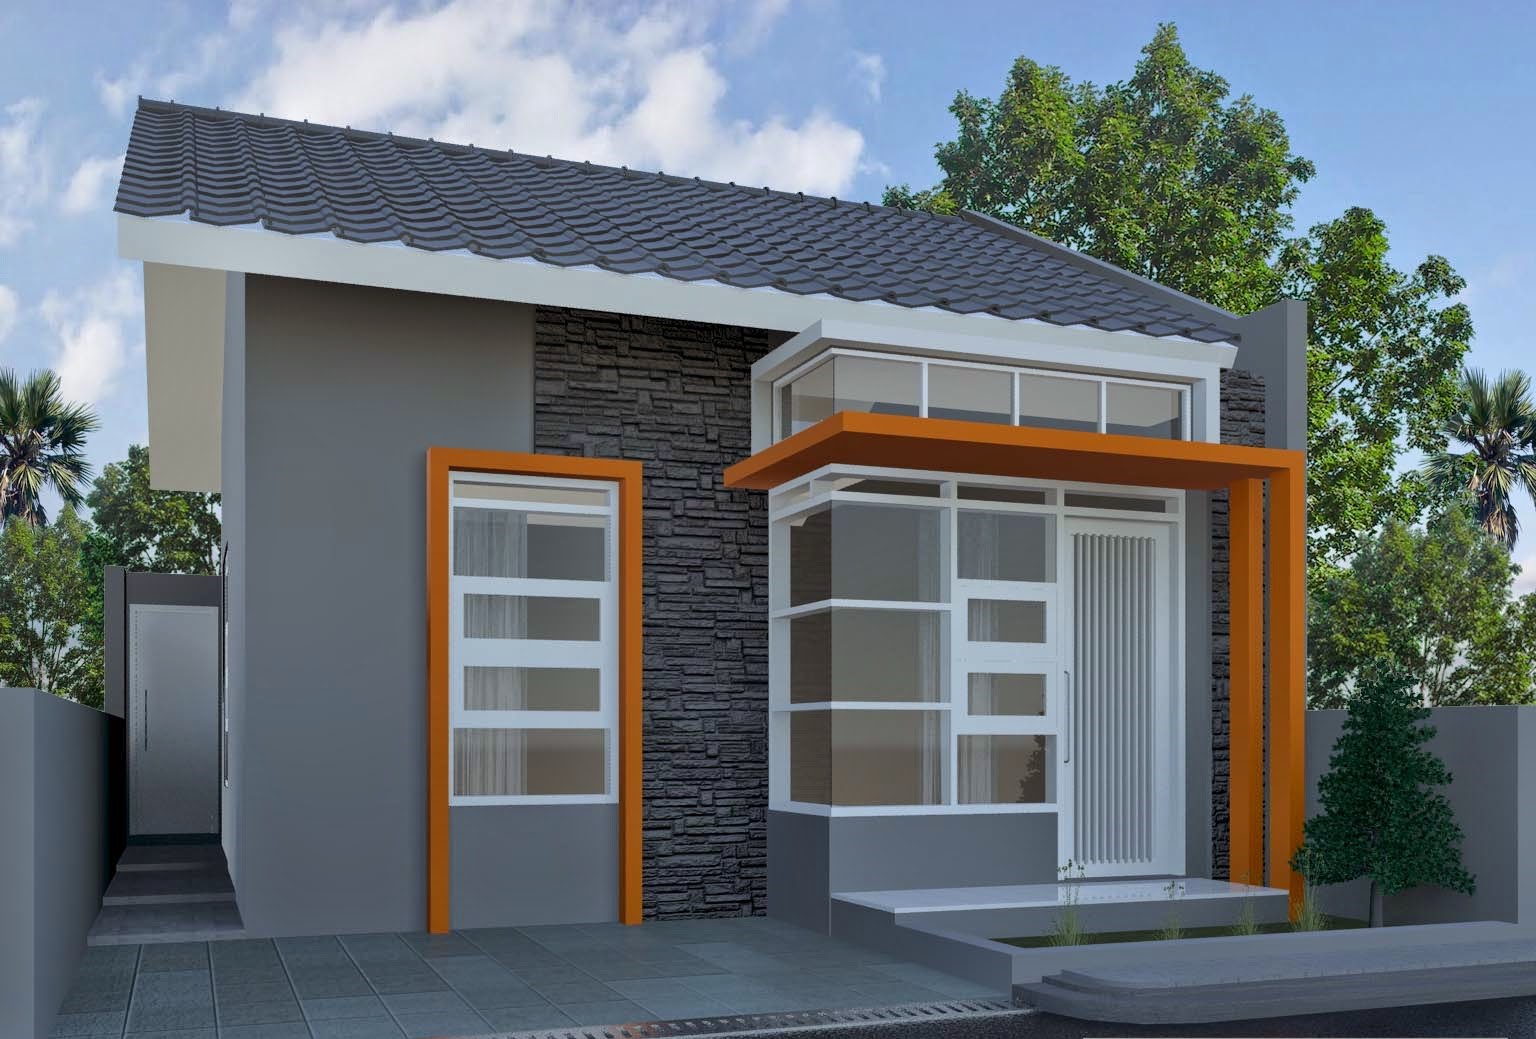 21 Model Rumah Sederhana Tapi Kelihatan Mewah Terbaru 2019 ...